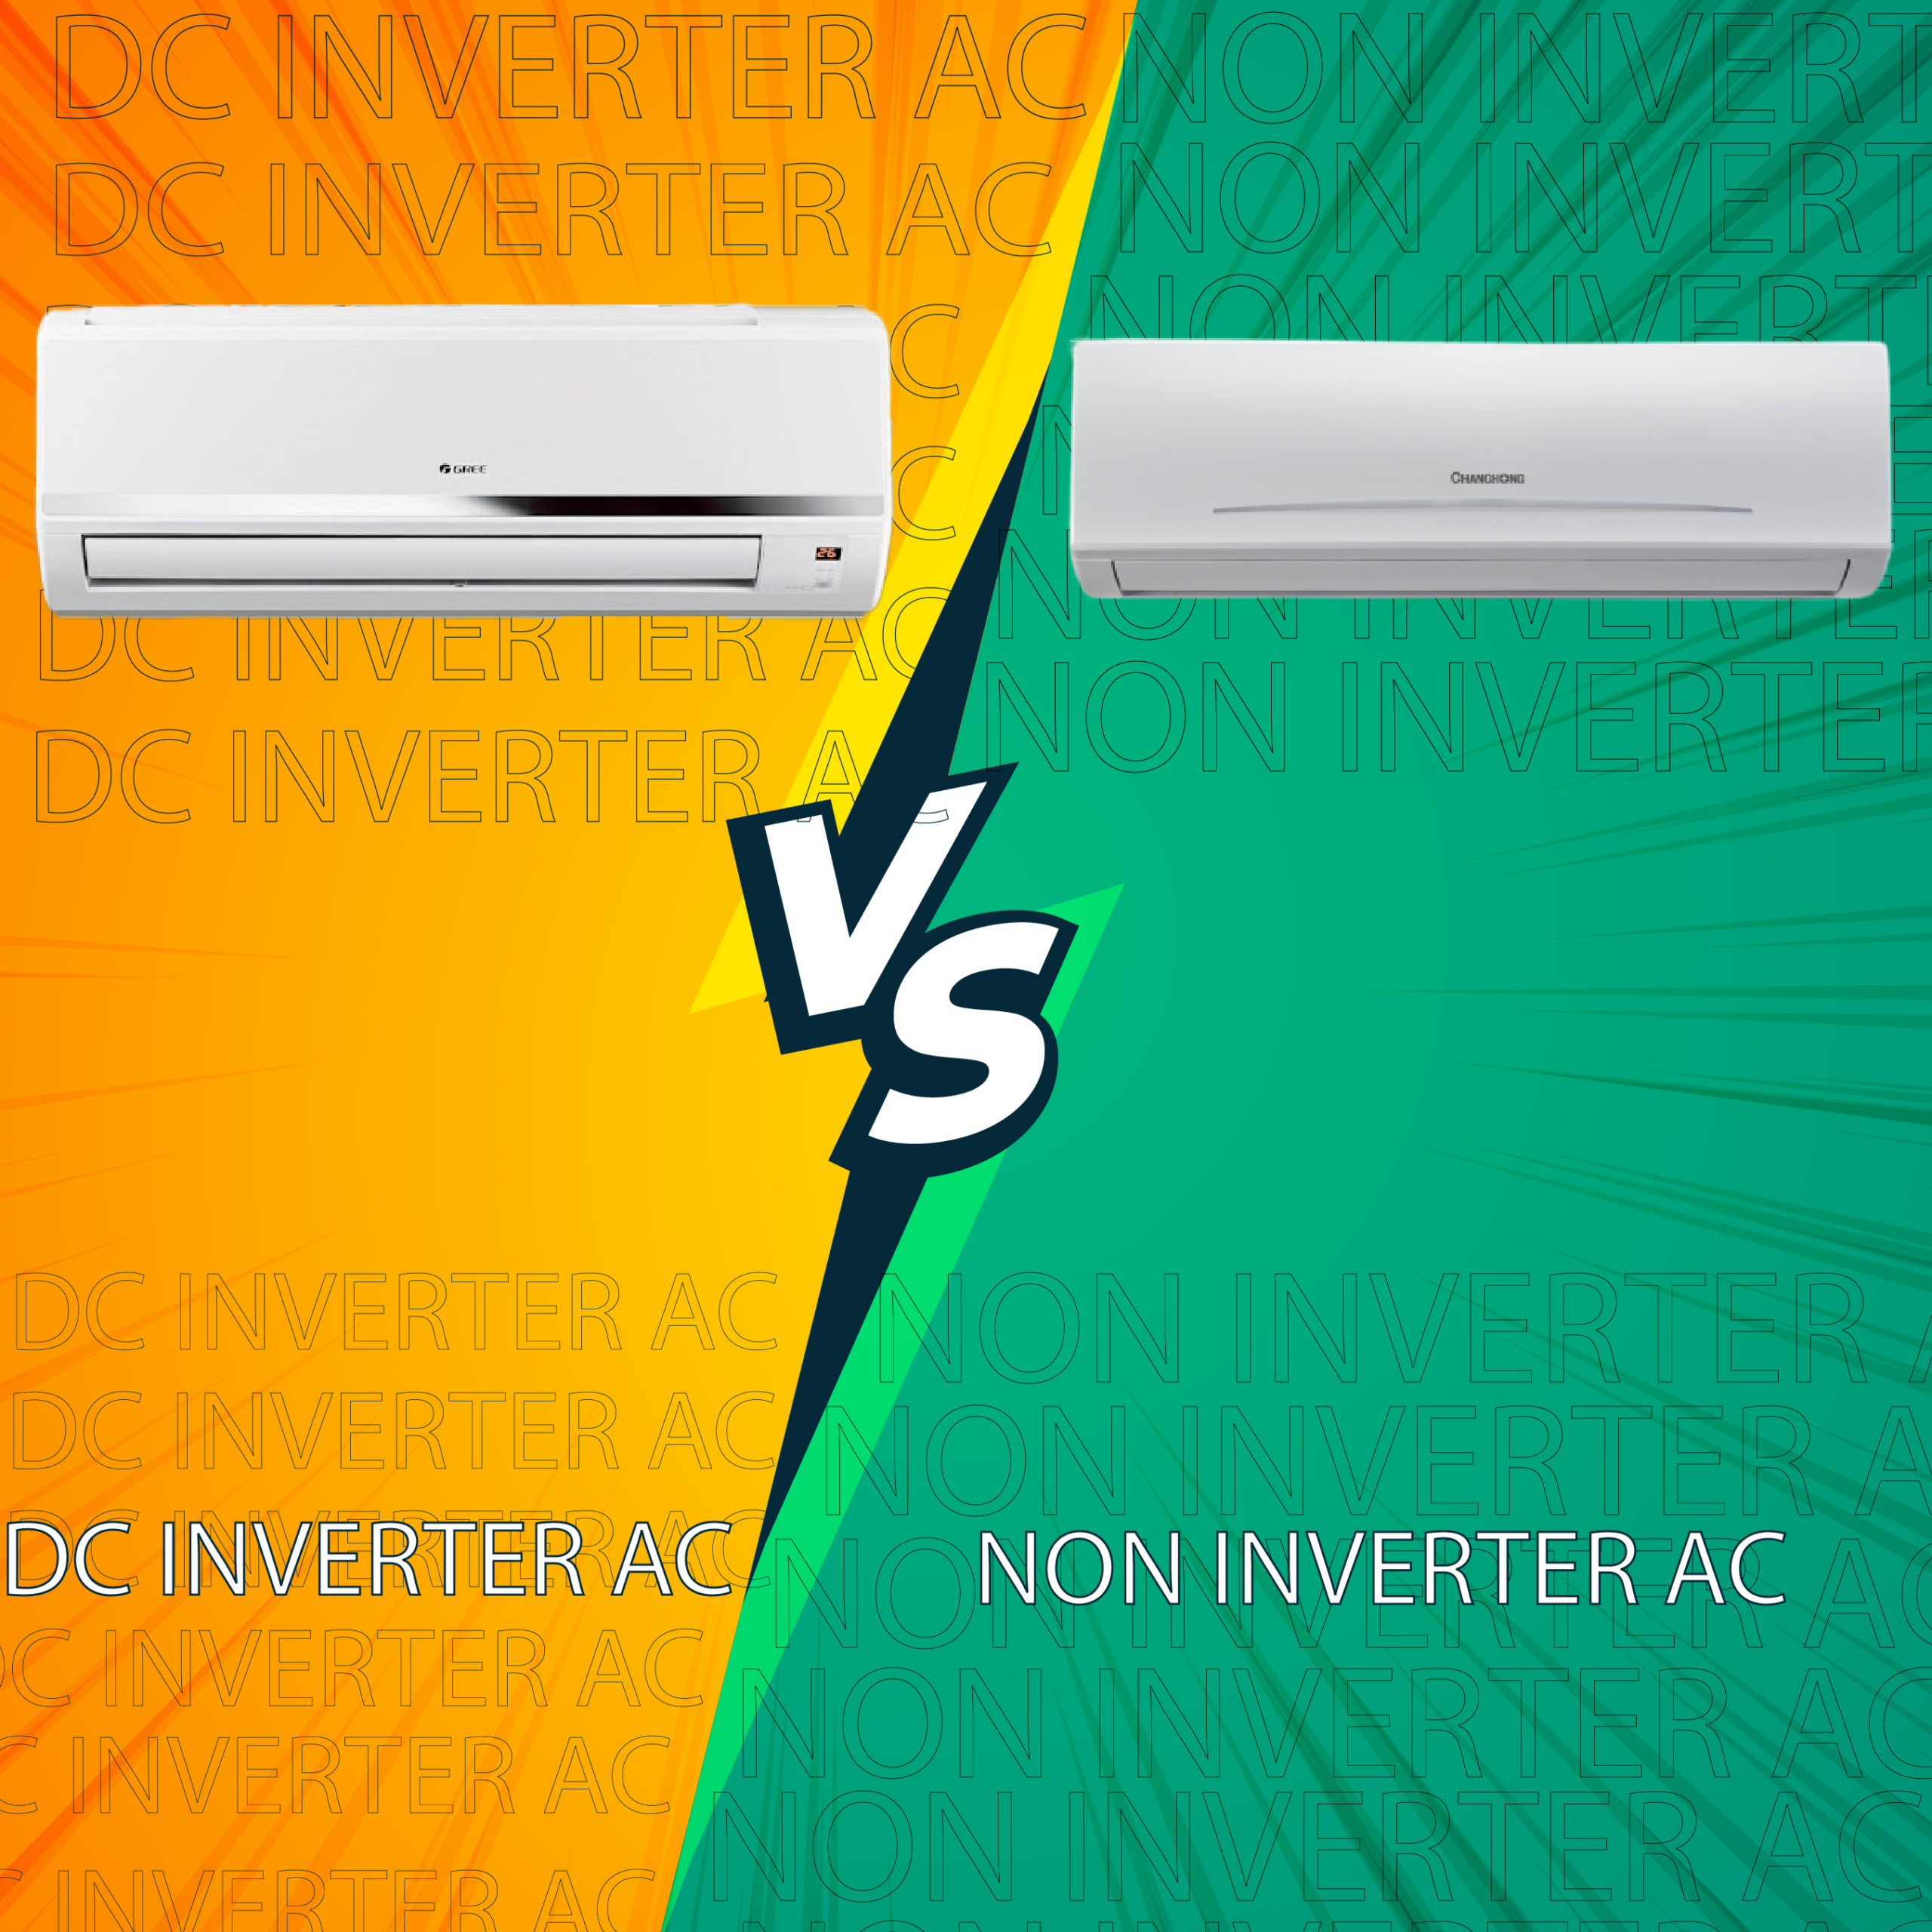 DC Inverter AC vs Non-Inverter AC